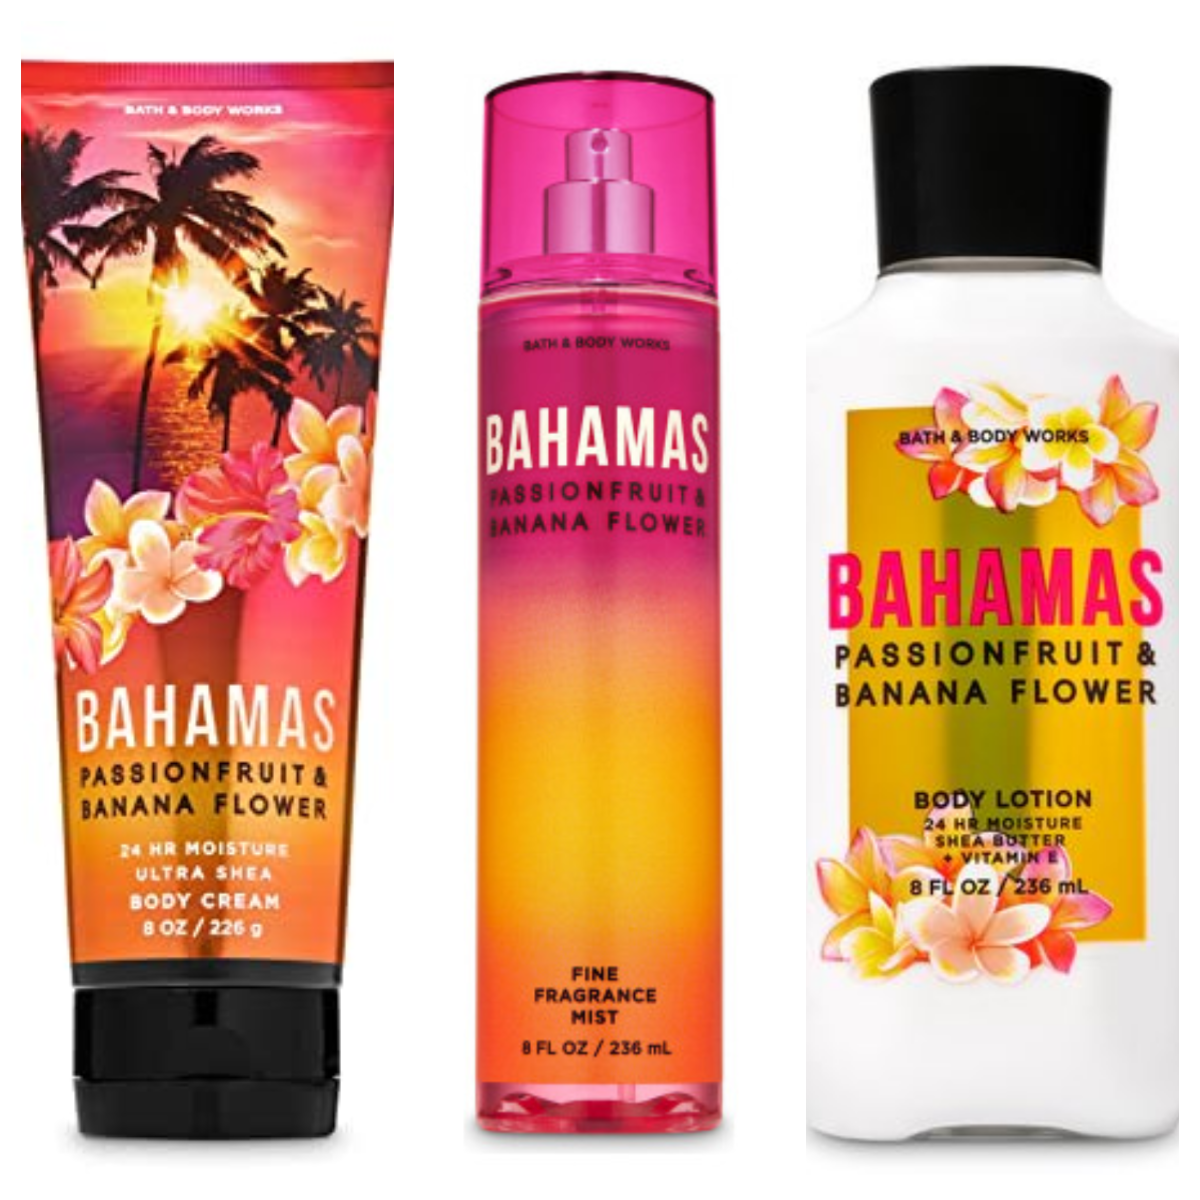 Bahamas Passion Fruit And Banana Flower Bathandbodyworks Perfumes Nb 7299